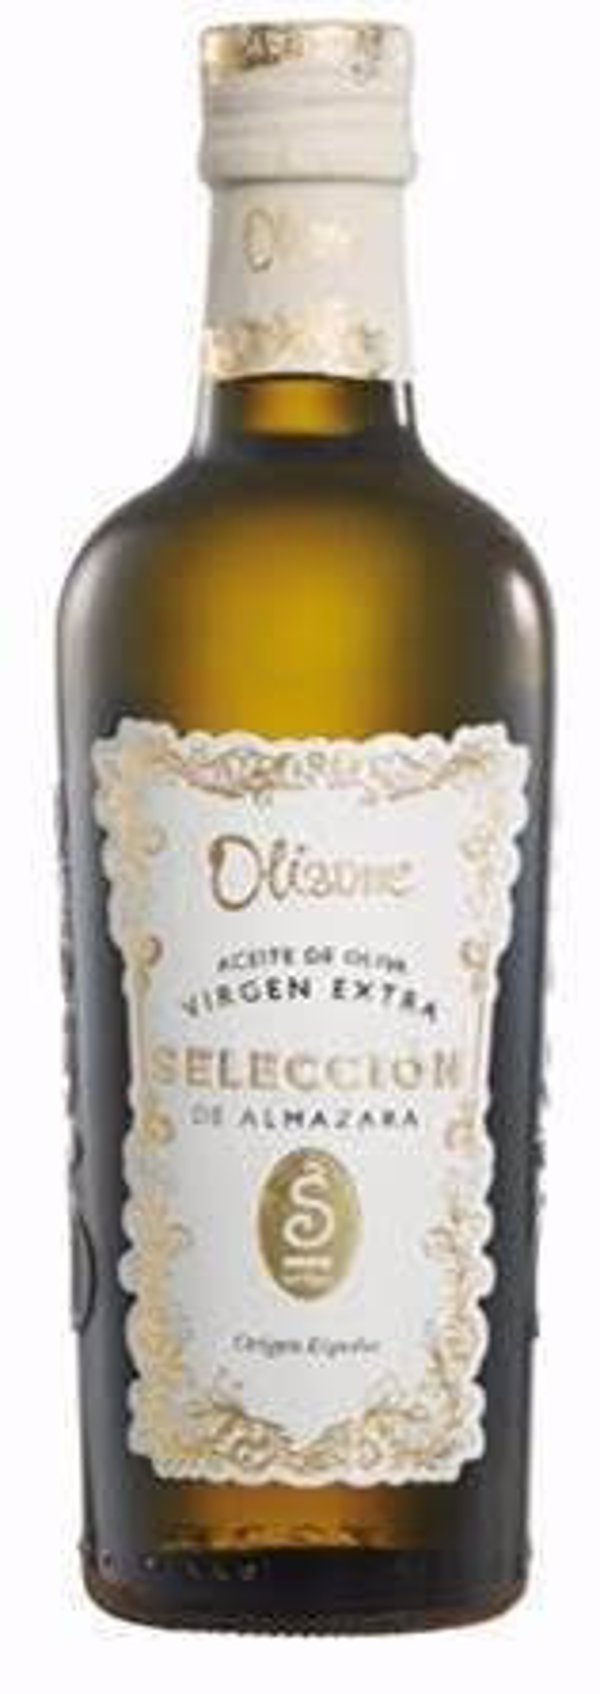 El aceite de oliva virgen extra de Lidl, Medalla de Oro en la NYIOOC World Best Olive Oils Competition